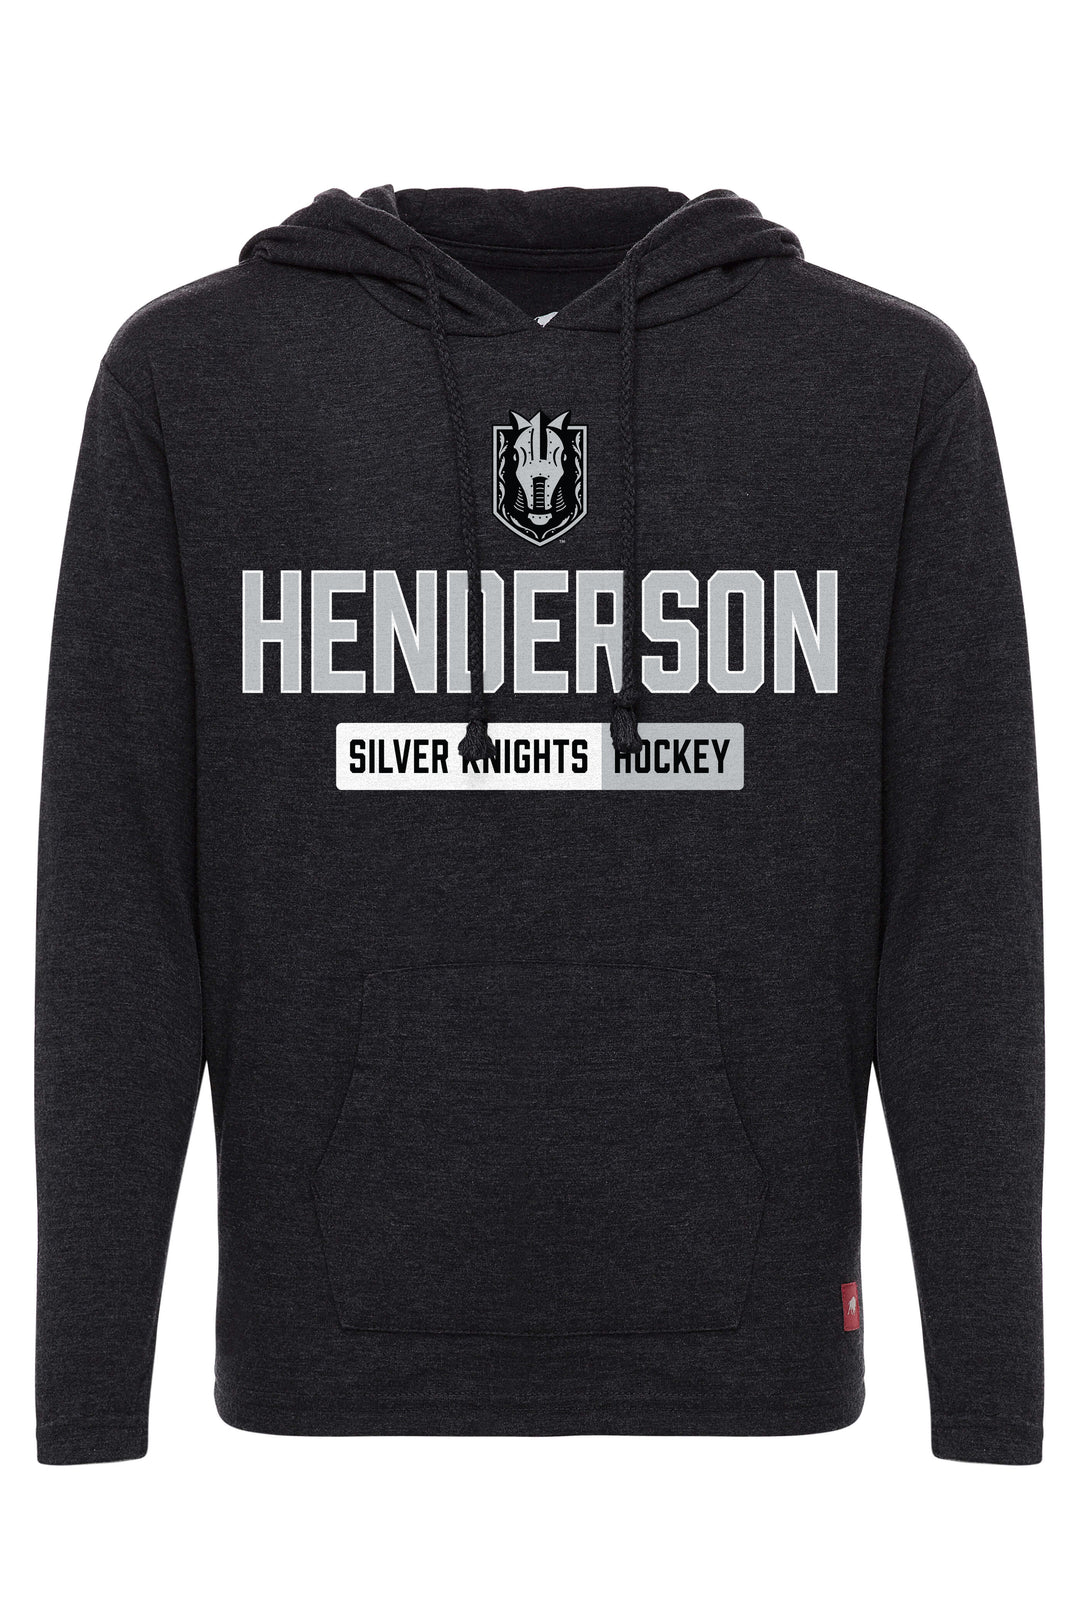 Henderson Silver Knights Adult Long Sleeve Tee with Hood - Vegas Team Store